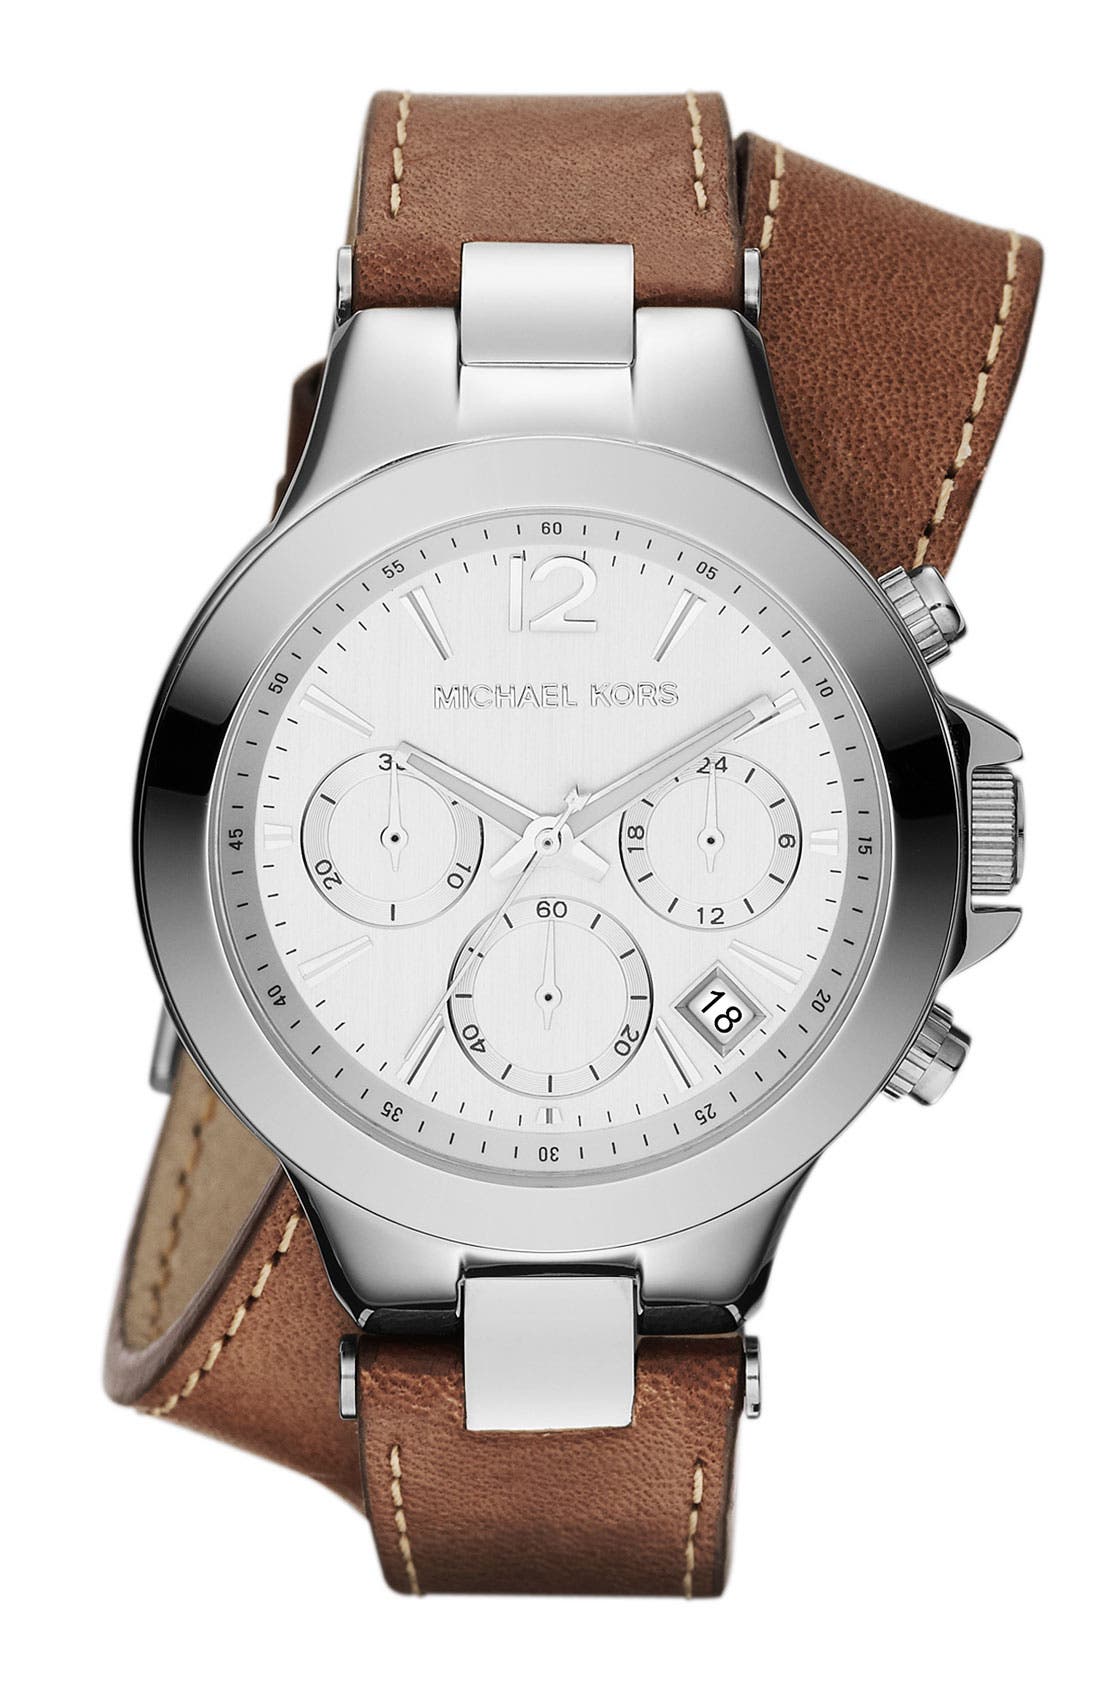 michael kors leather wrap watch